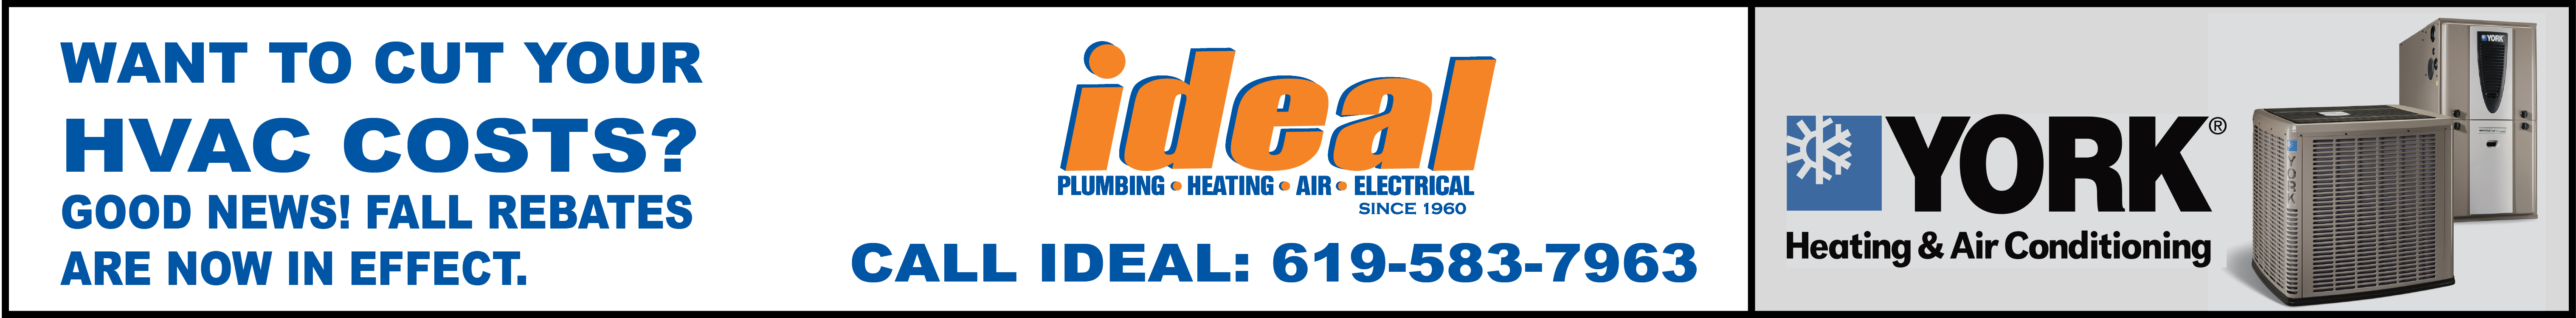 York Heating Air Conditioning Rebates Ideal Service